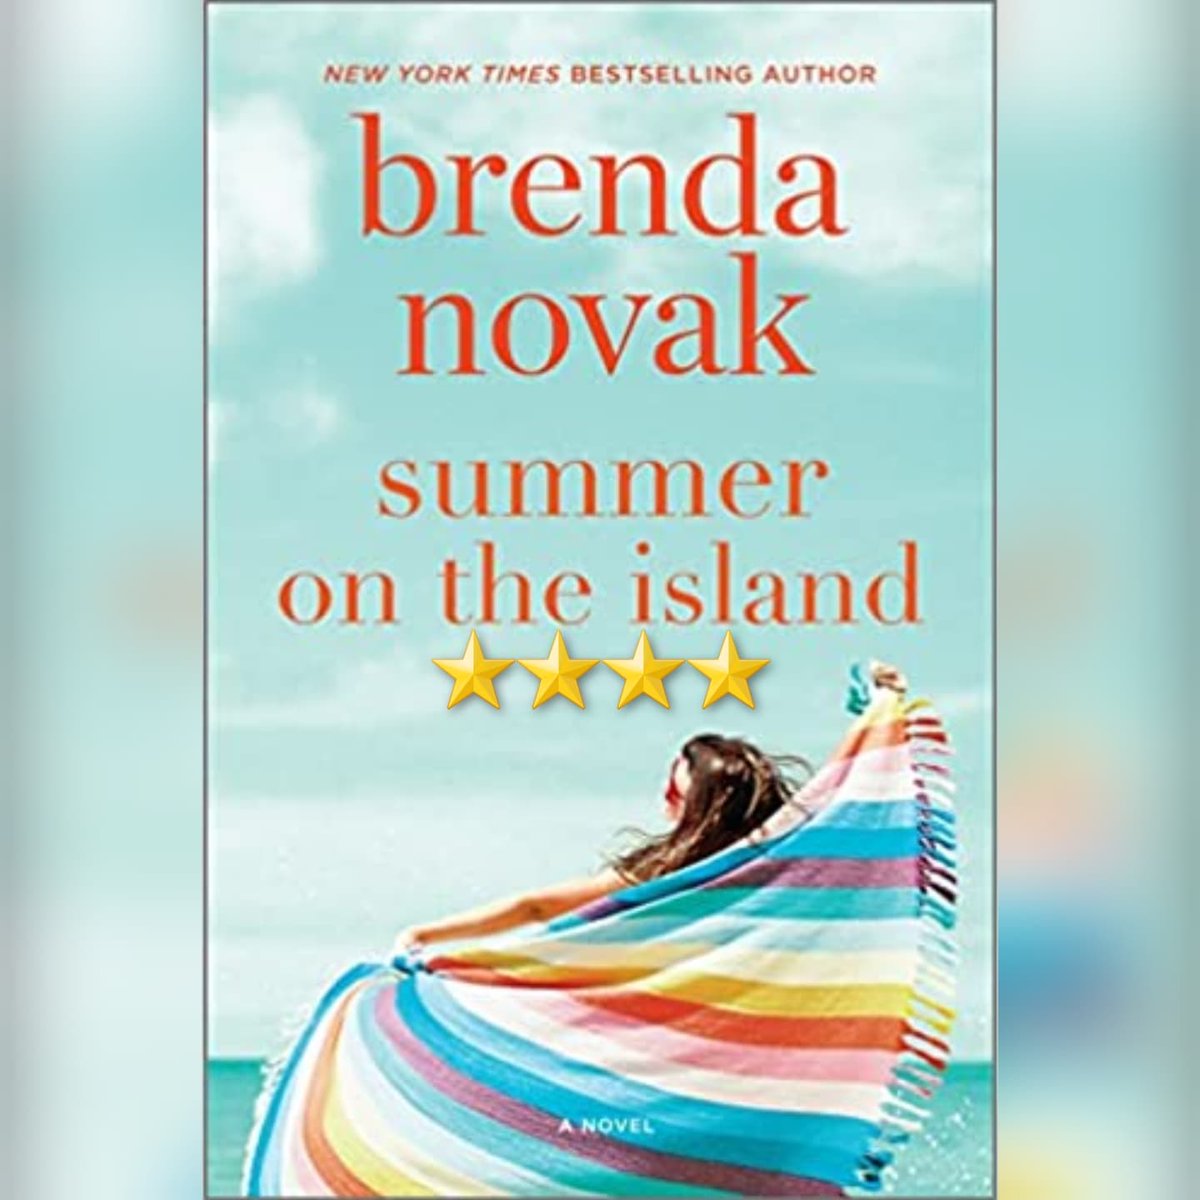 #BlogTour: Summer On The Island by @Brenda_Novak (via @HTP_Books): Strong #Summer #Romance / #WomensFiction Marred By Frequent References To #COVID. #bookreview #amreading #amreadingromance #islandlife #Florida #BeachRead #Divorce #Love #Mystery #Secrets bookanon.com/2022/04/06/blo…